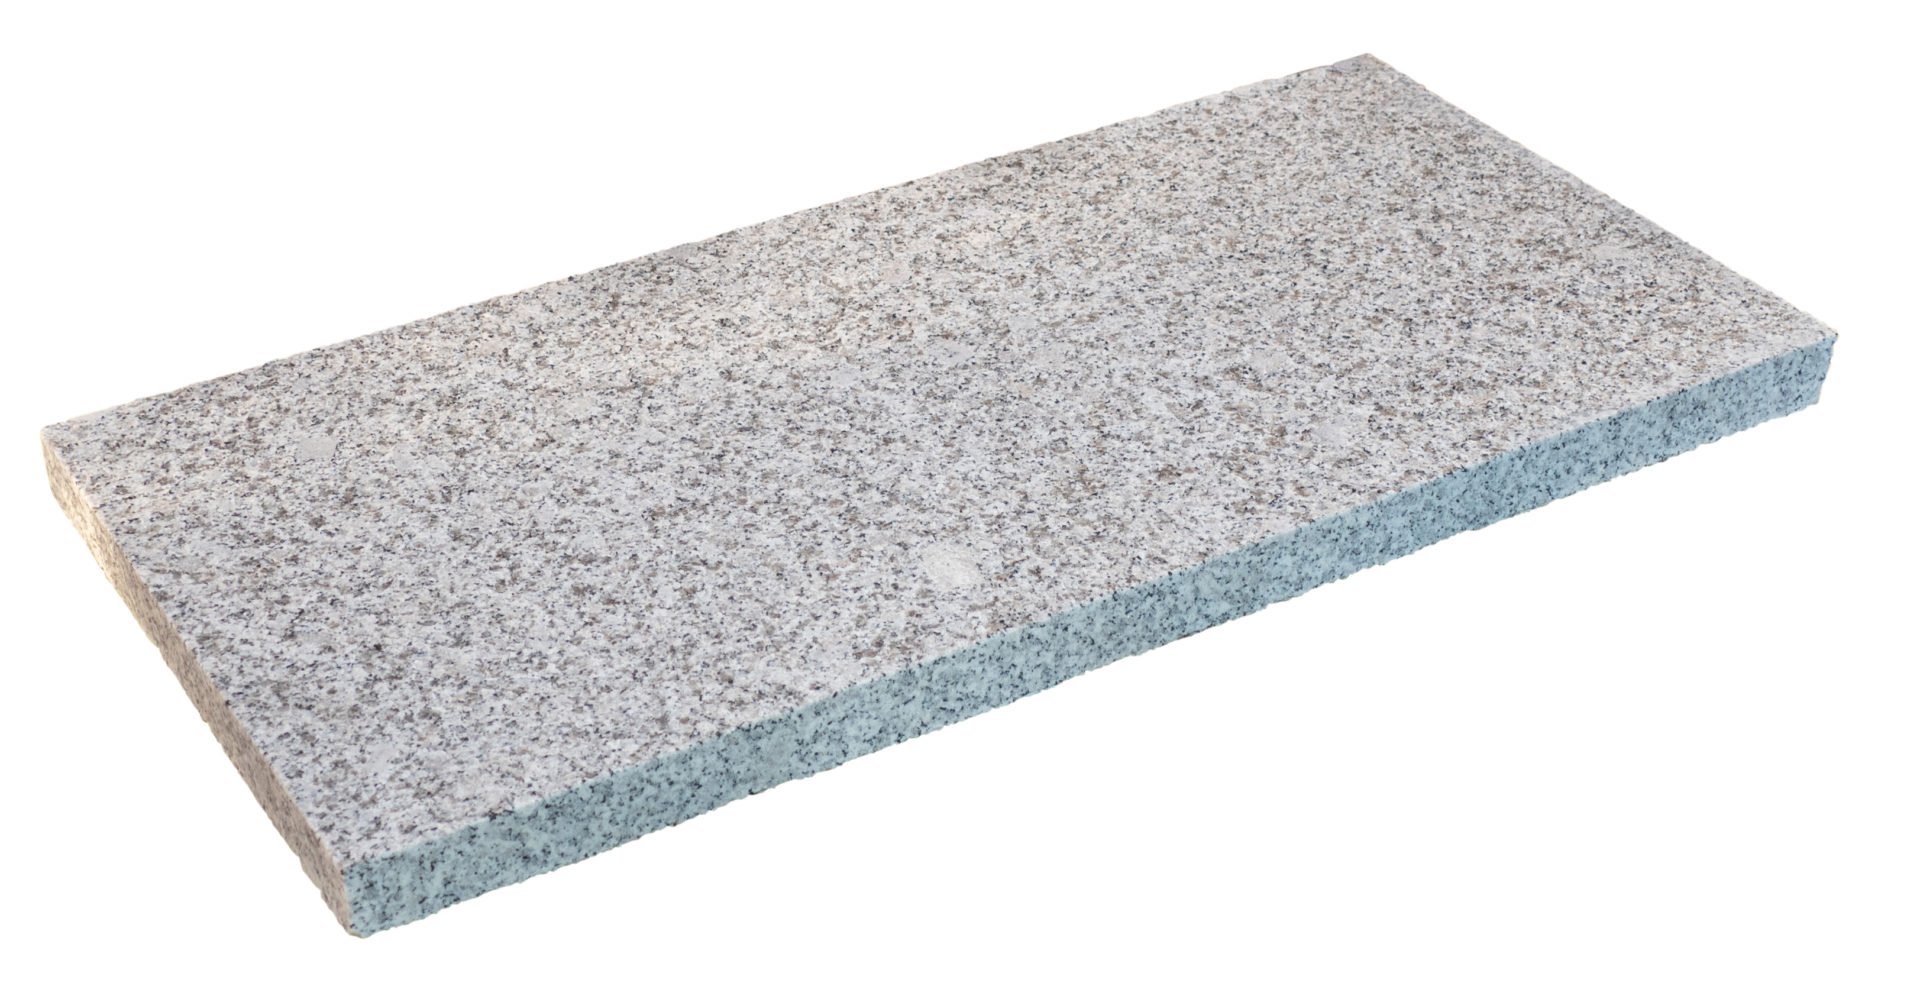 deevert - dalle en pierre naturelle – granit - 04